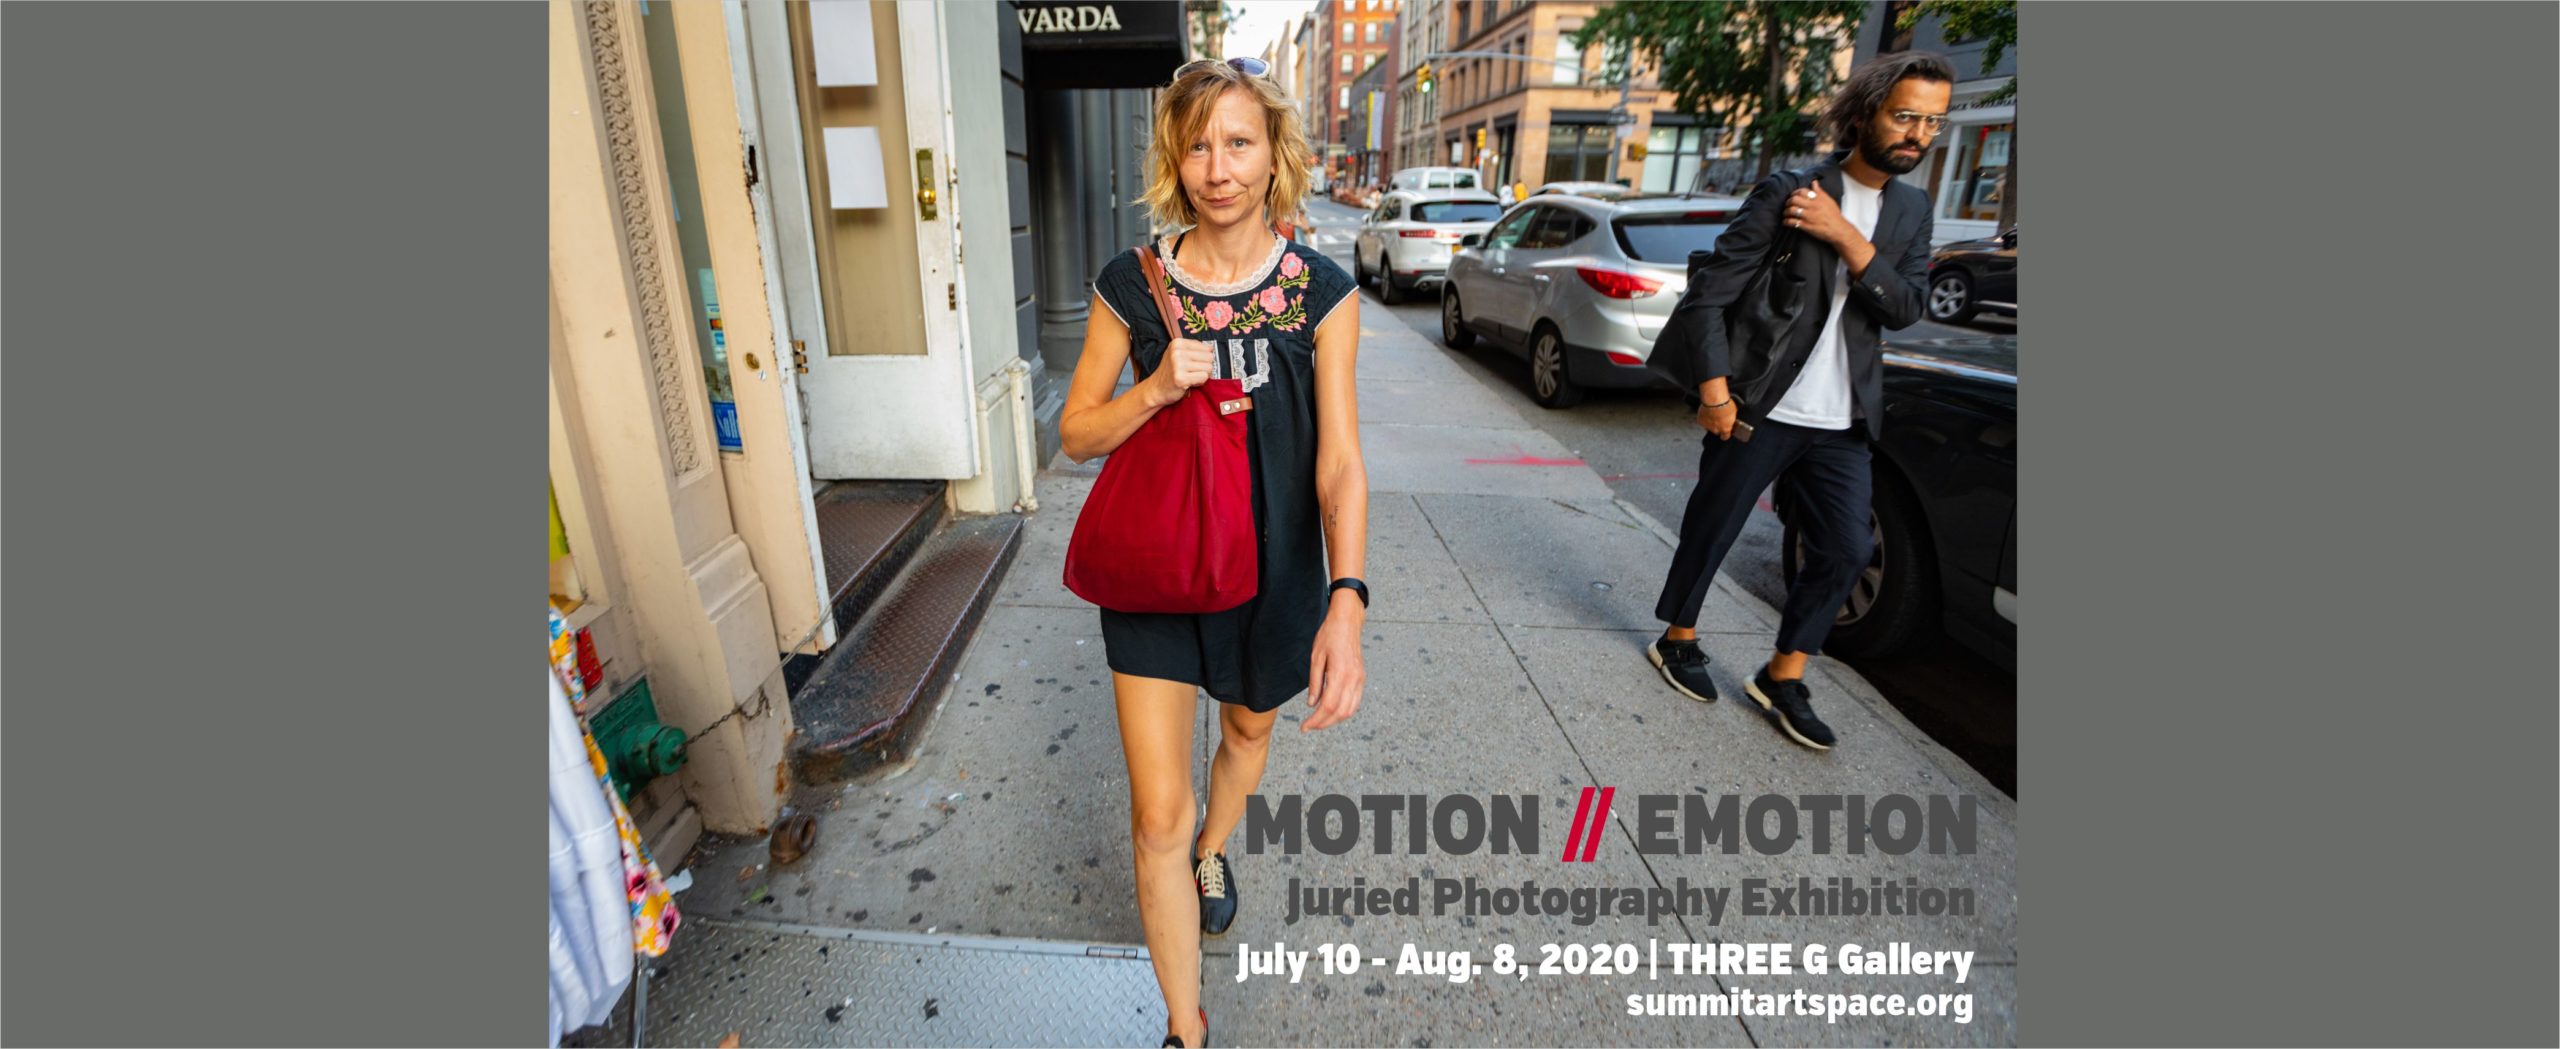 Motion Emotion Juried Art Exhibition